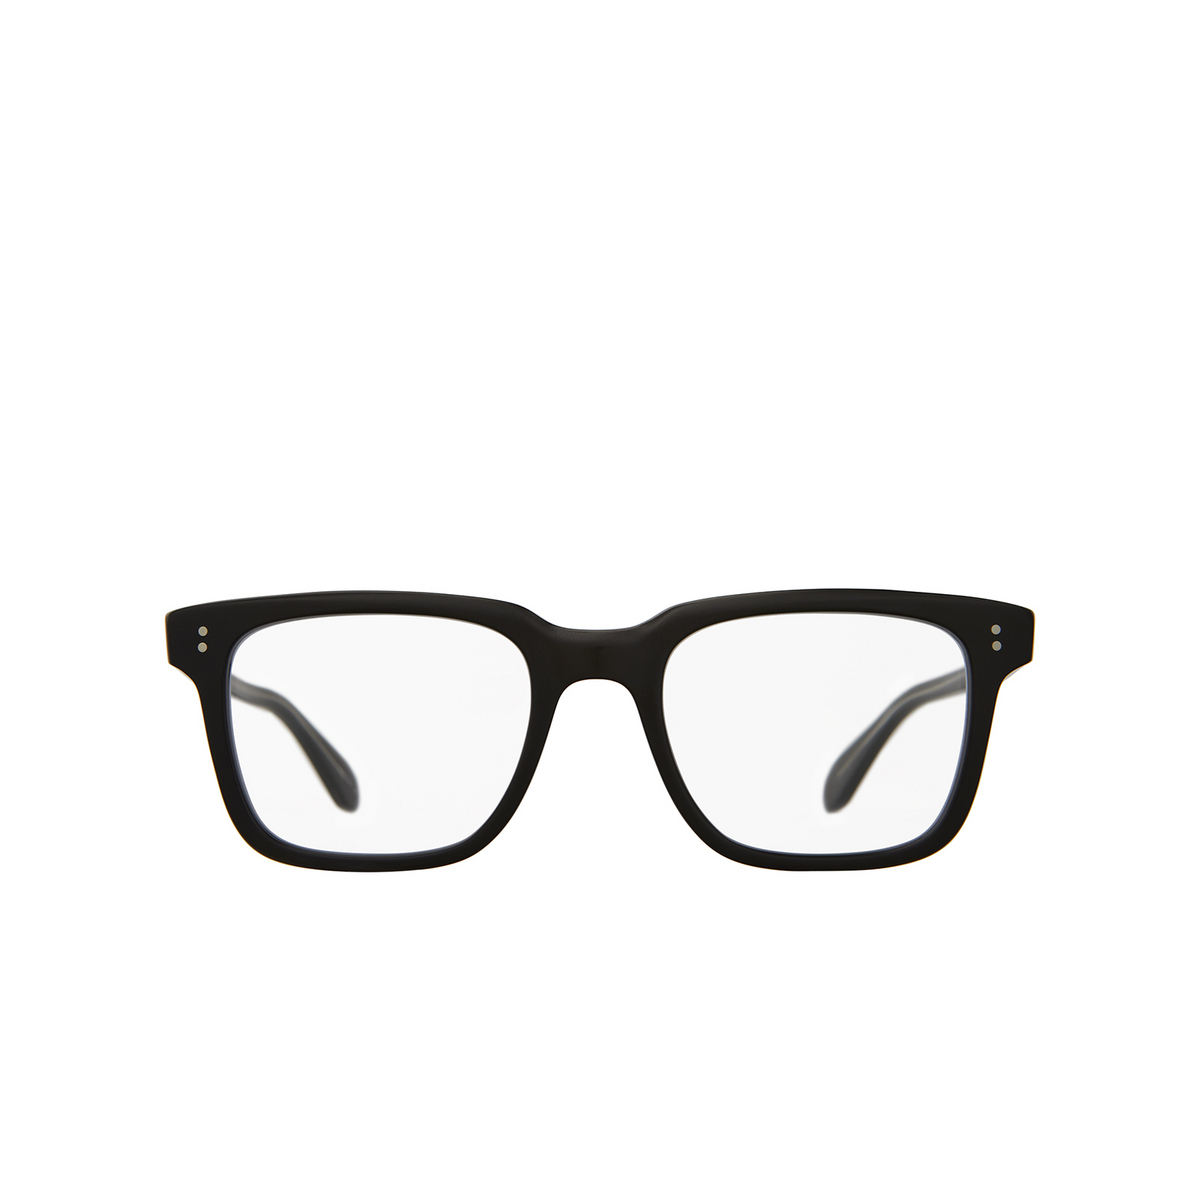 Garrett Leight PALLADIUM Eyeglasses MBK Matte Black - front view